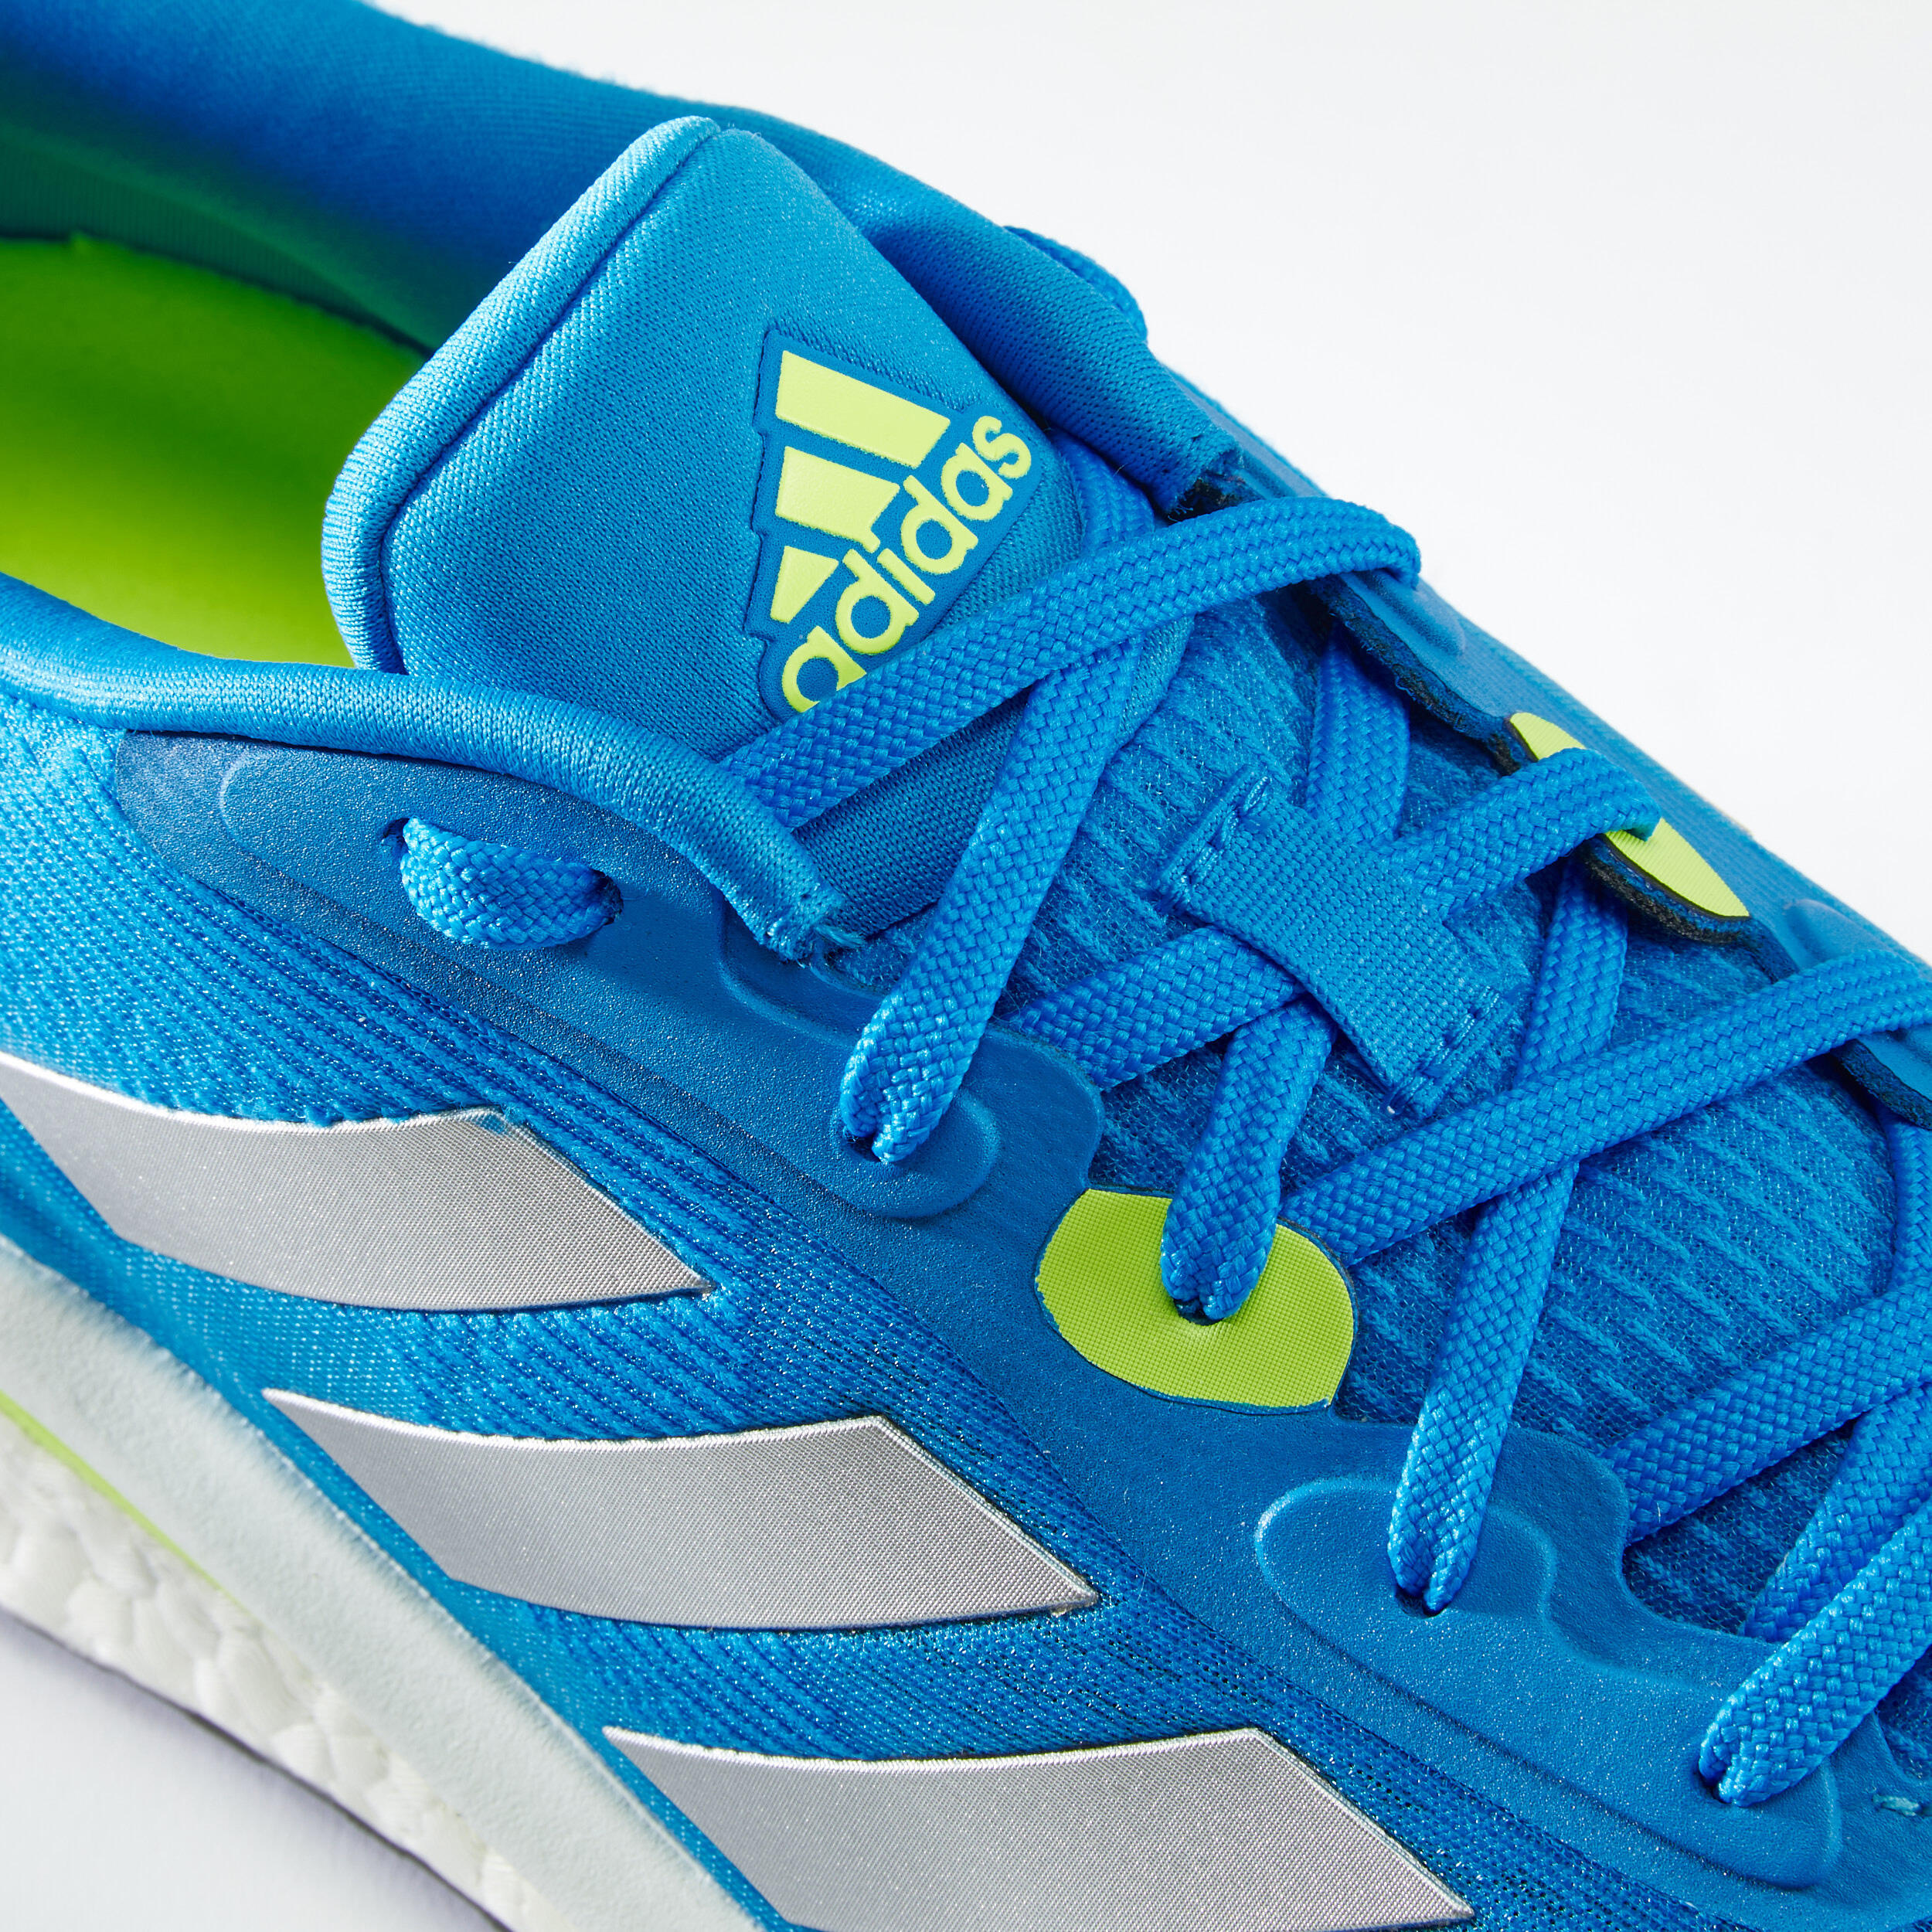 Men's Running Shoes Adidas Supernova Unite - blue yellow 7/8